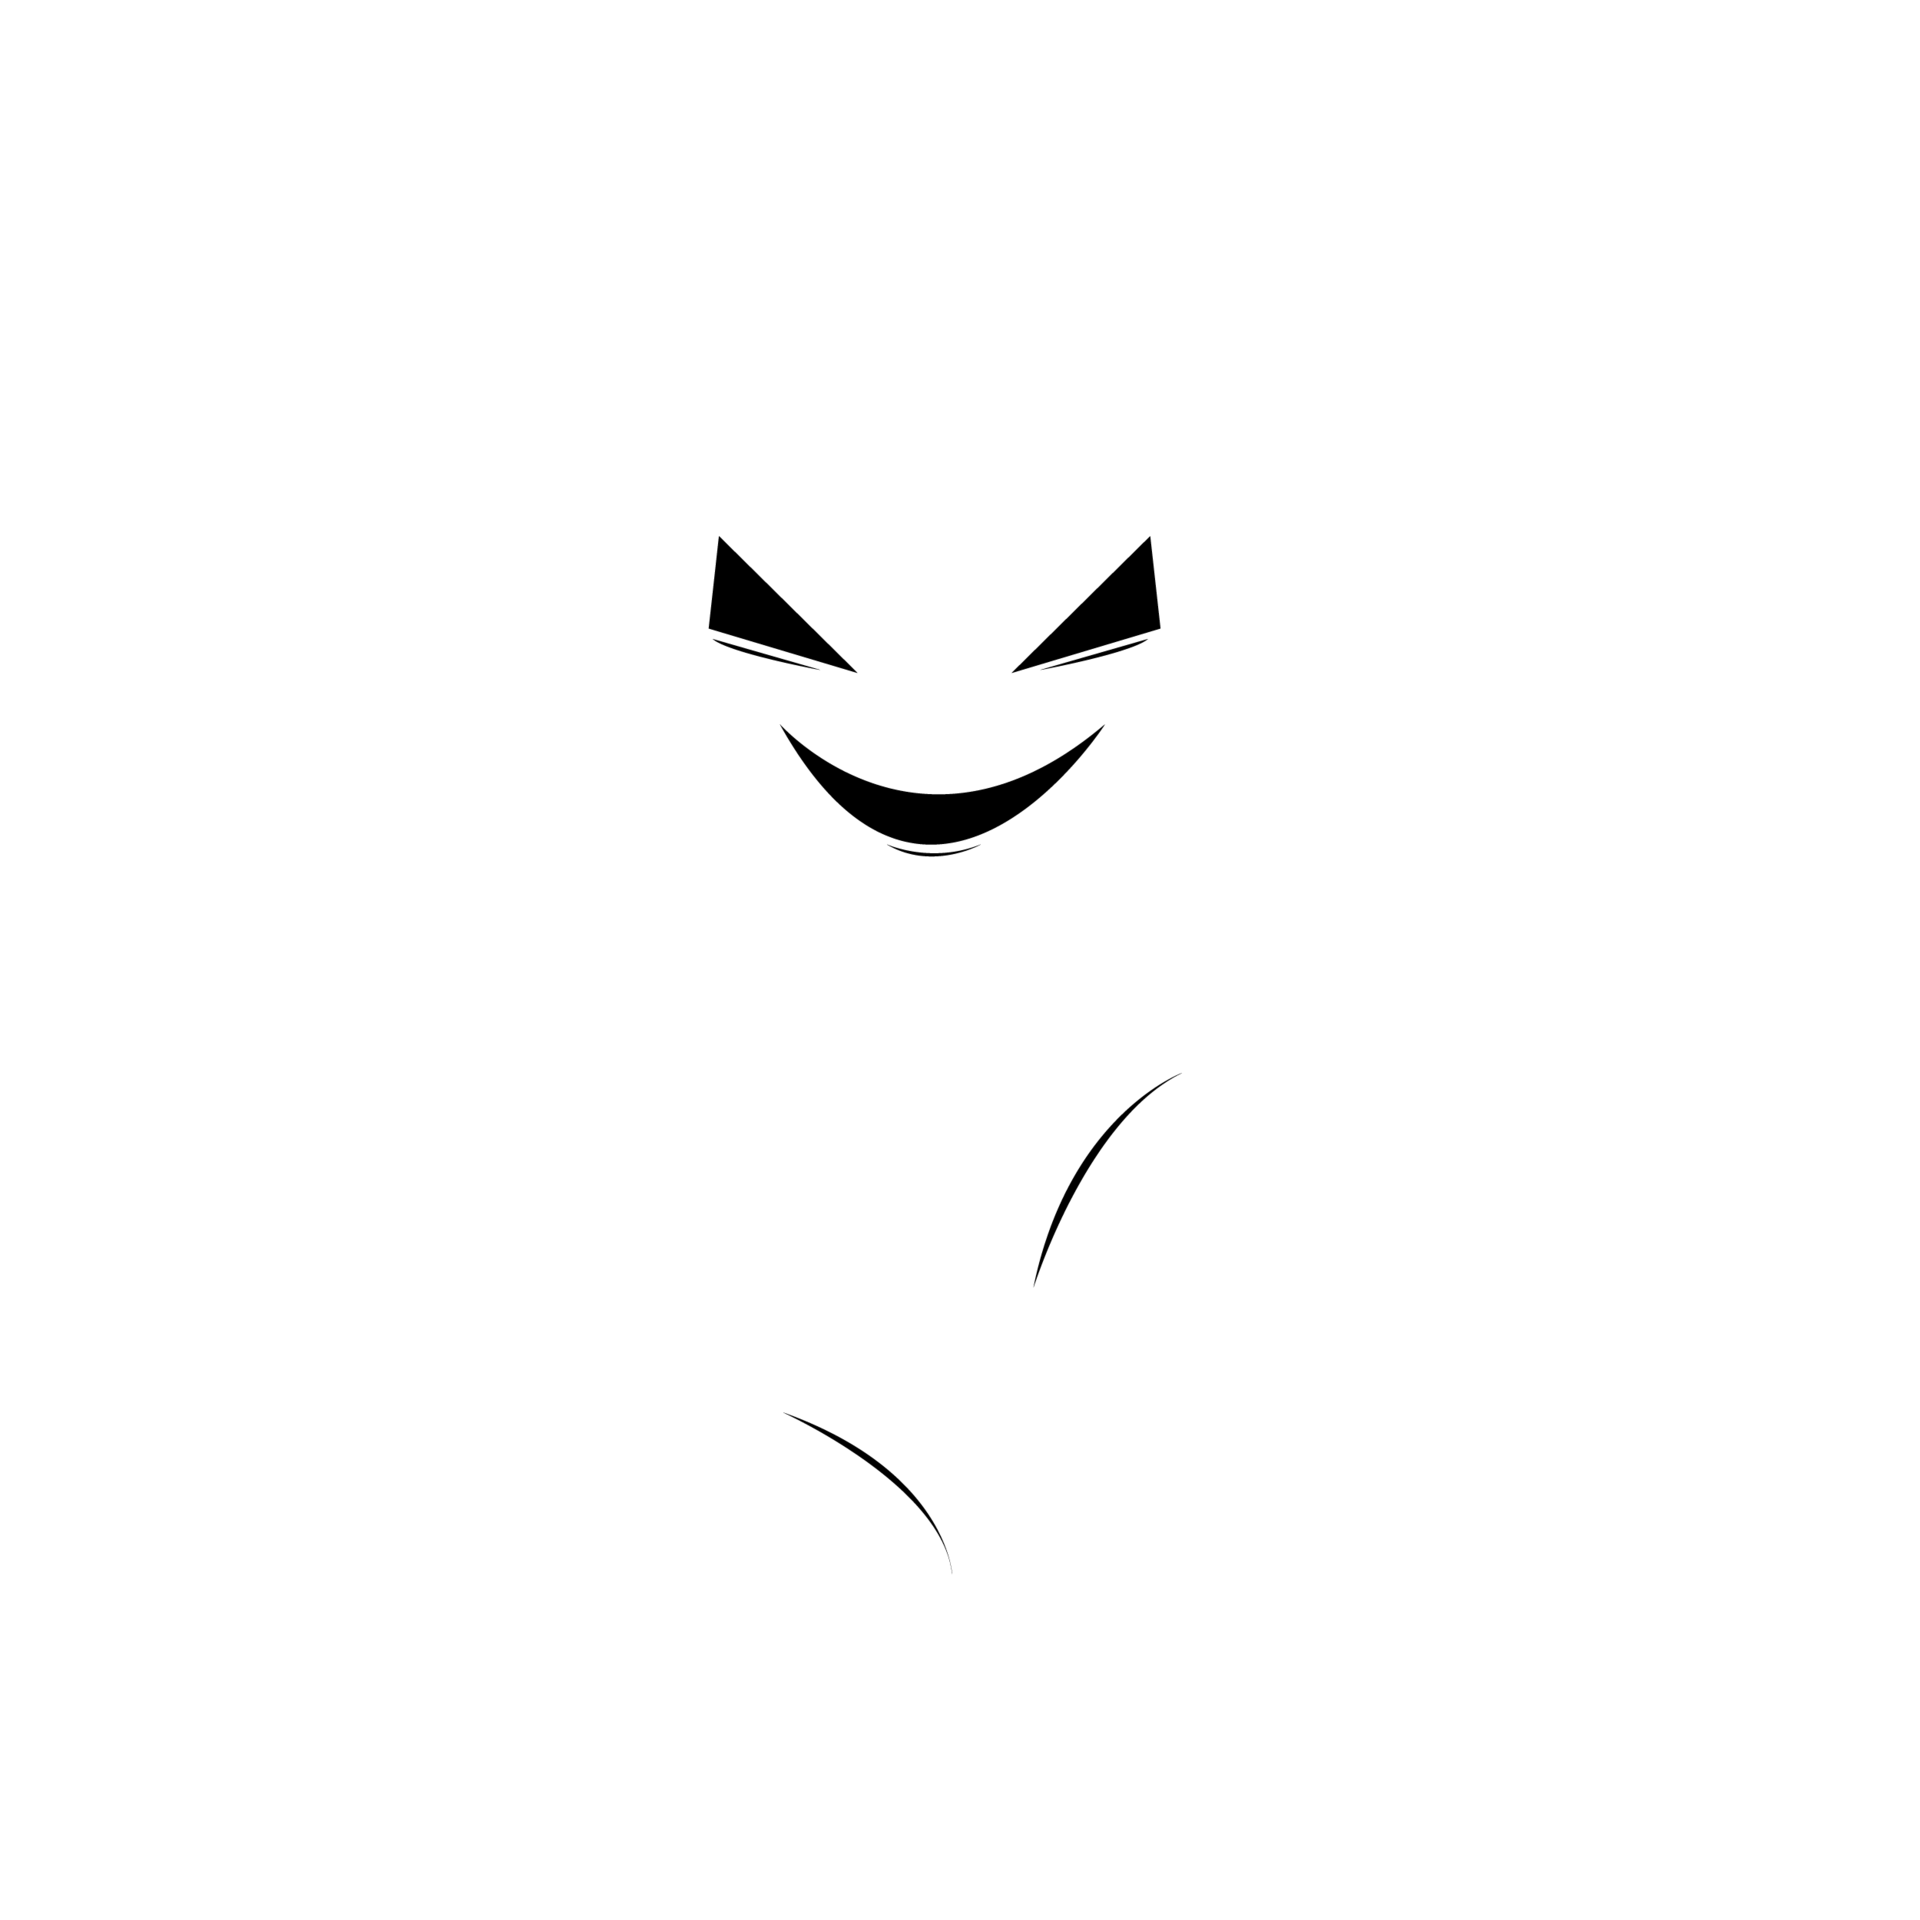 fantasma branco dos desenhos animados de halloween isolado no fundo branco.  fantasma assustador fantasma branco de halloween. fantasma com uma cara  assustadora. 11049500 Vetor no Vecteezy